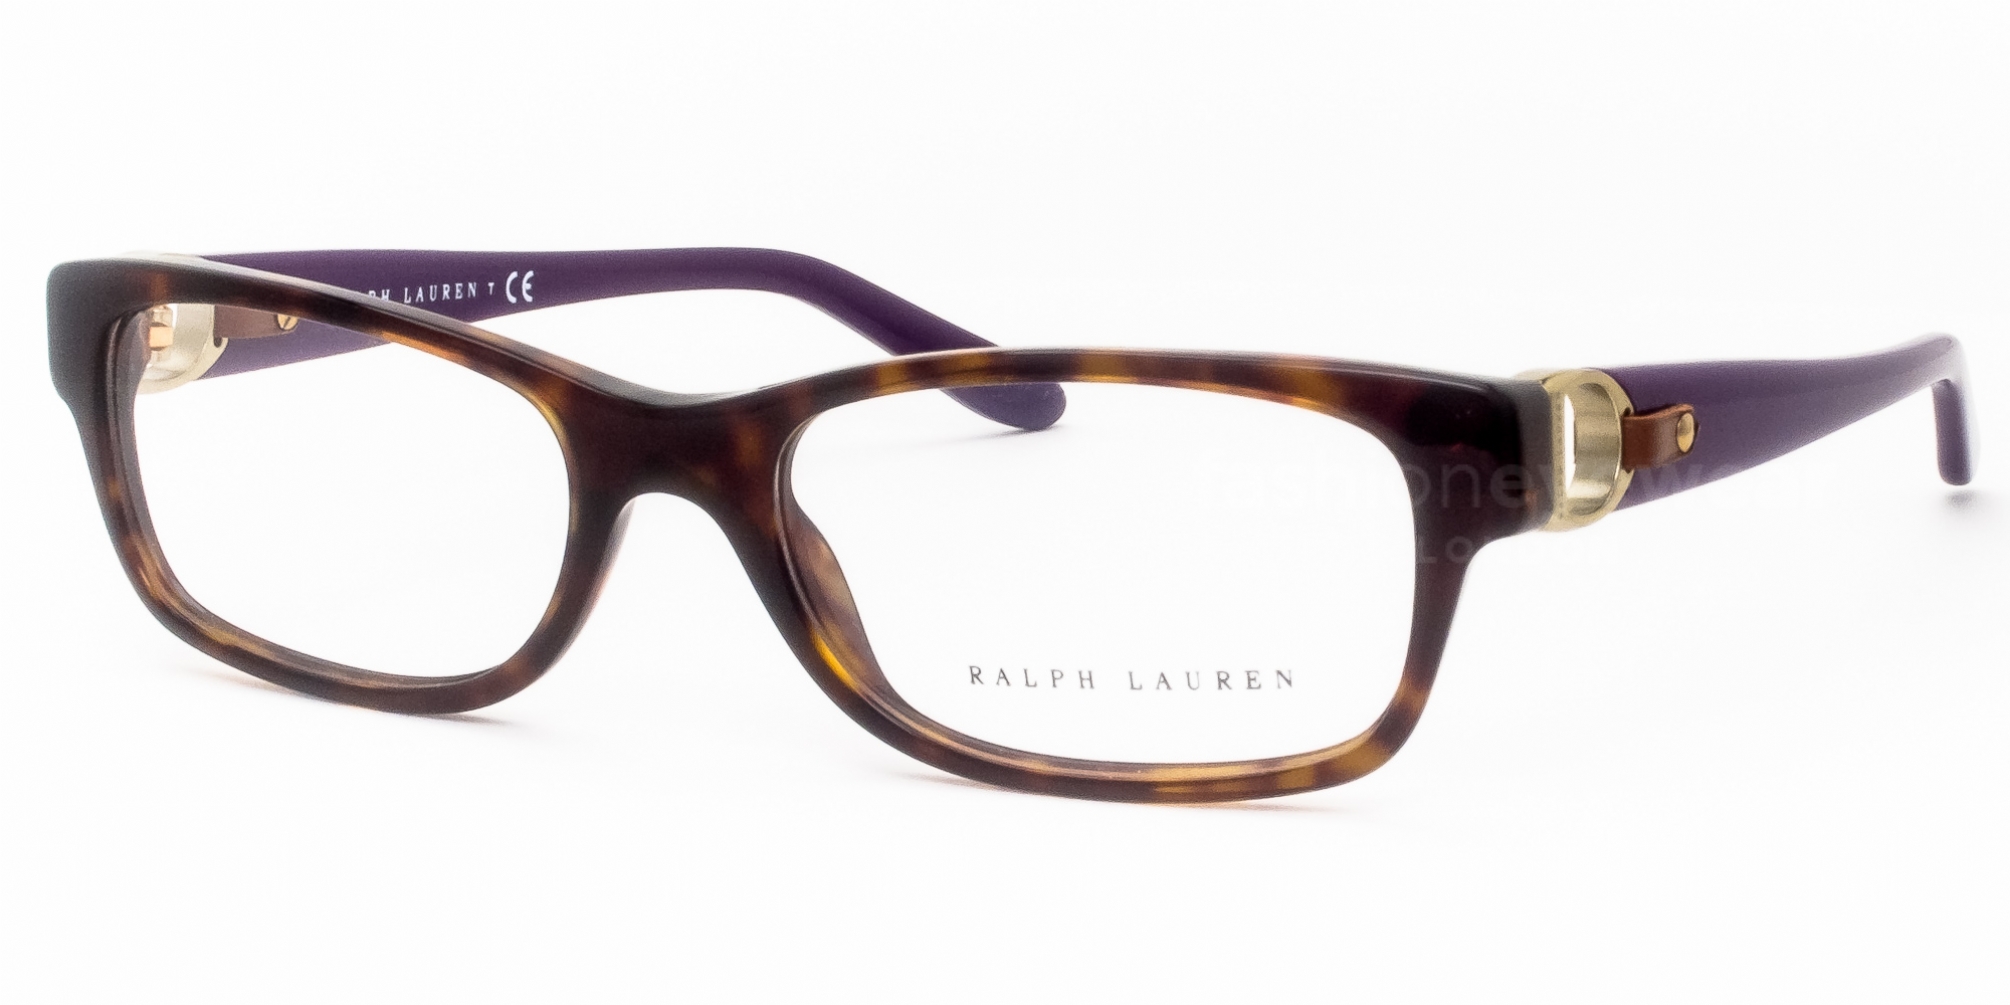 Buy Ralph Lauren Eyeglasses directly from OpticsFast.com